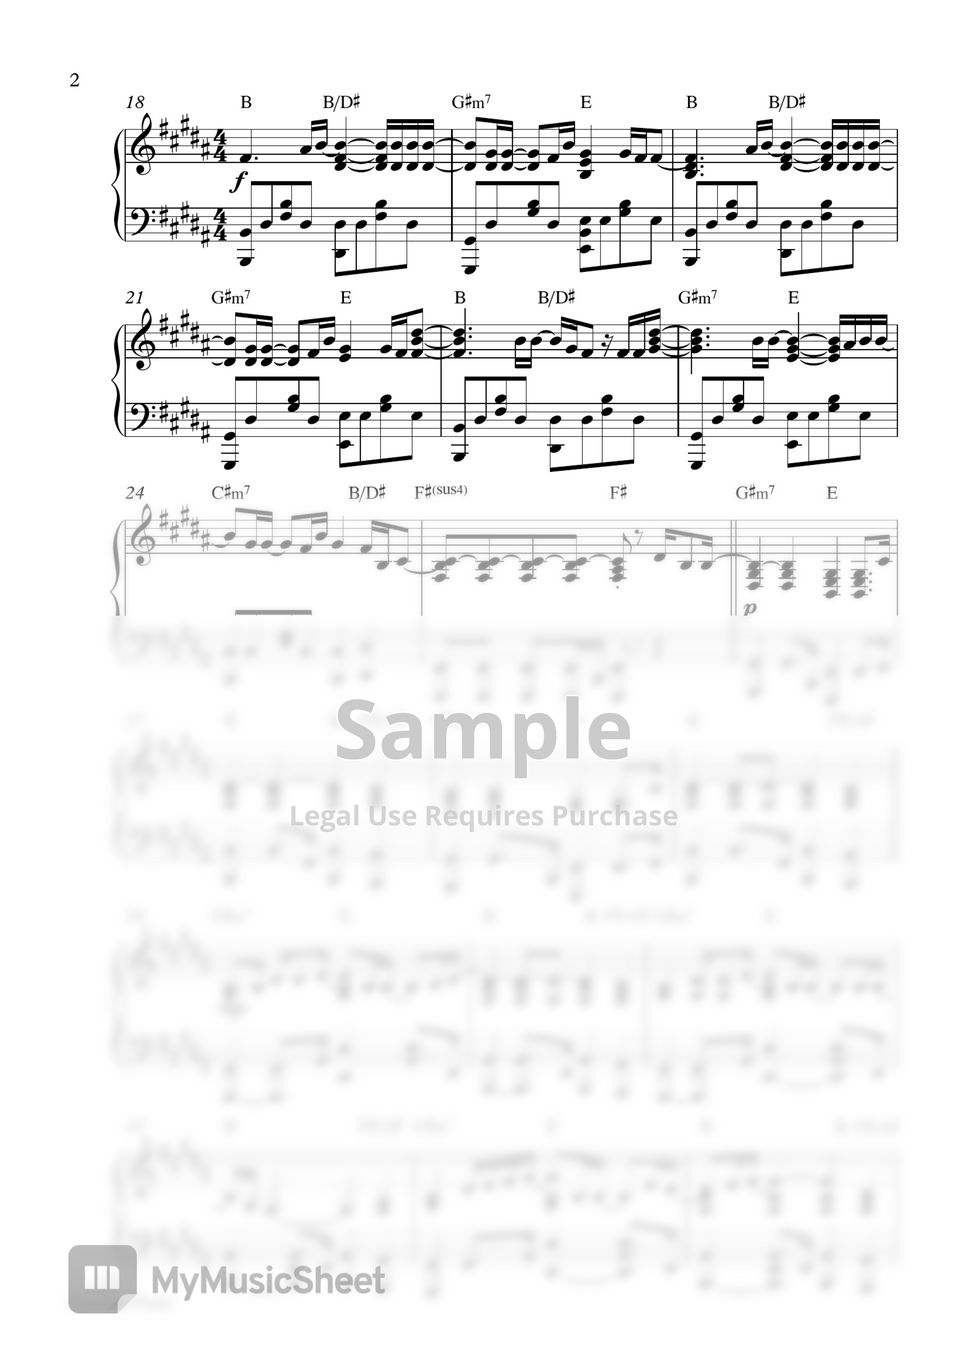 IU - Love Poem (Piano Sheet) by Pianella Piano